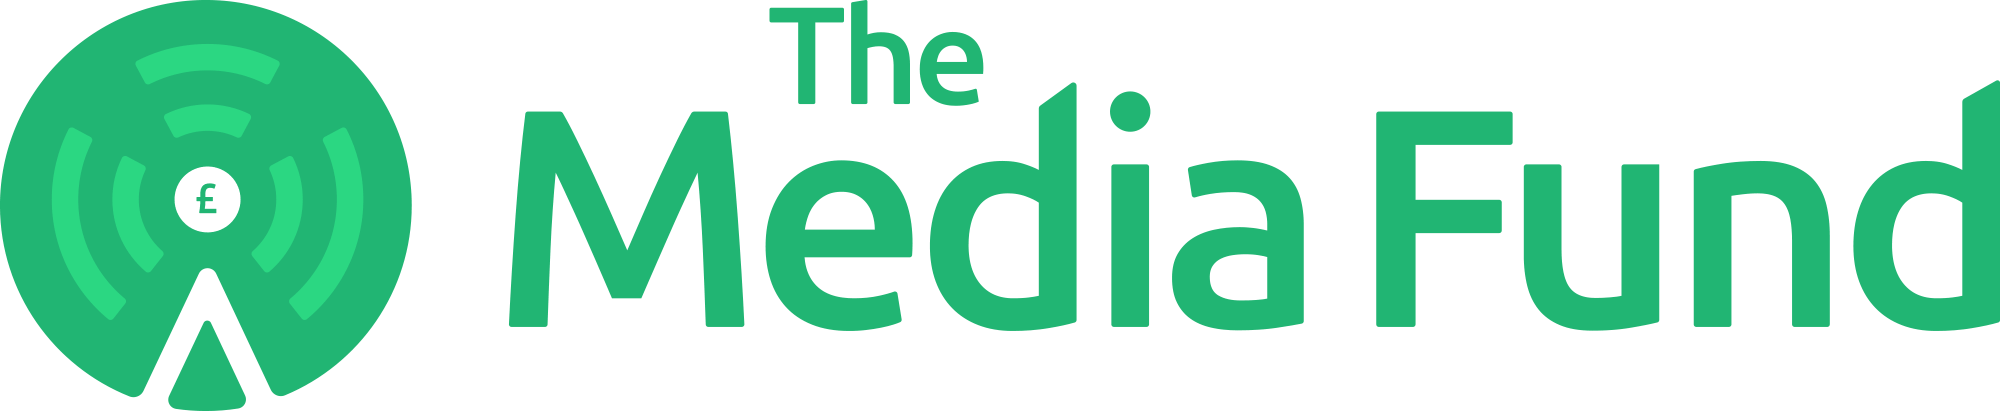 Fund Logo - Home Media Fund